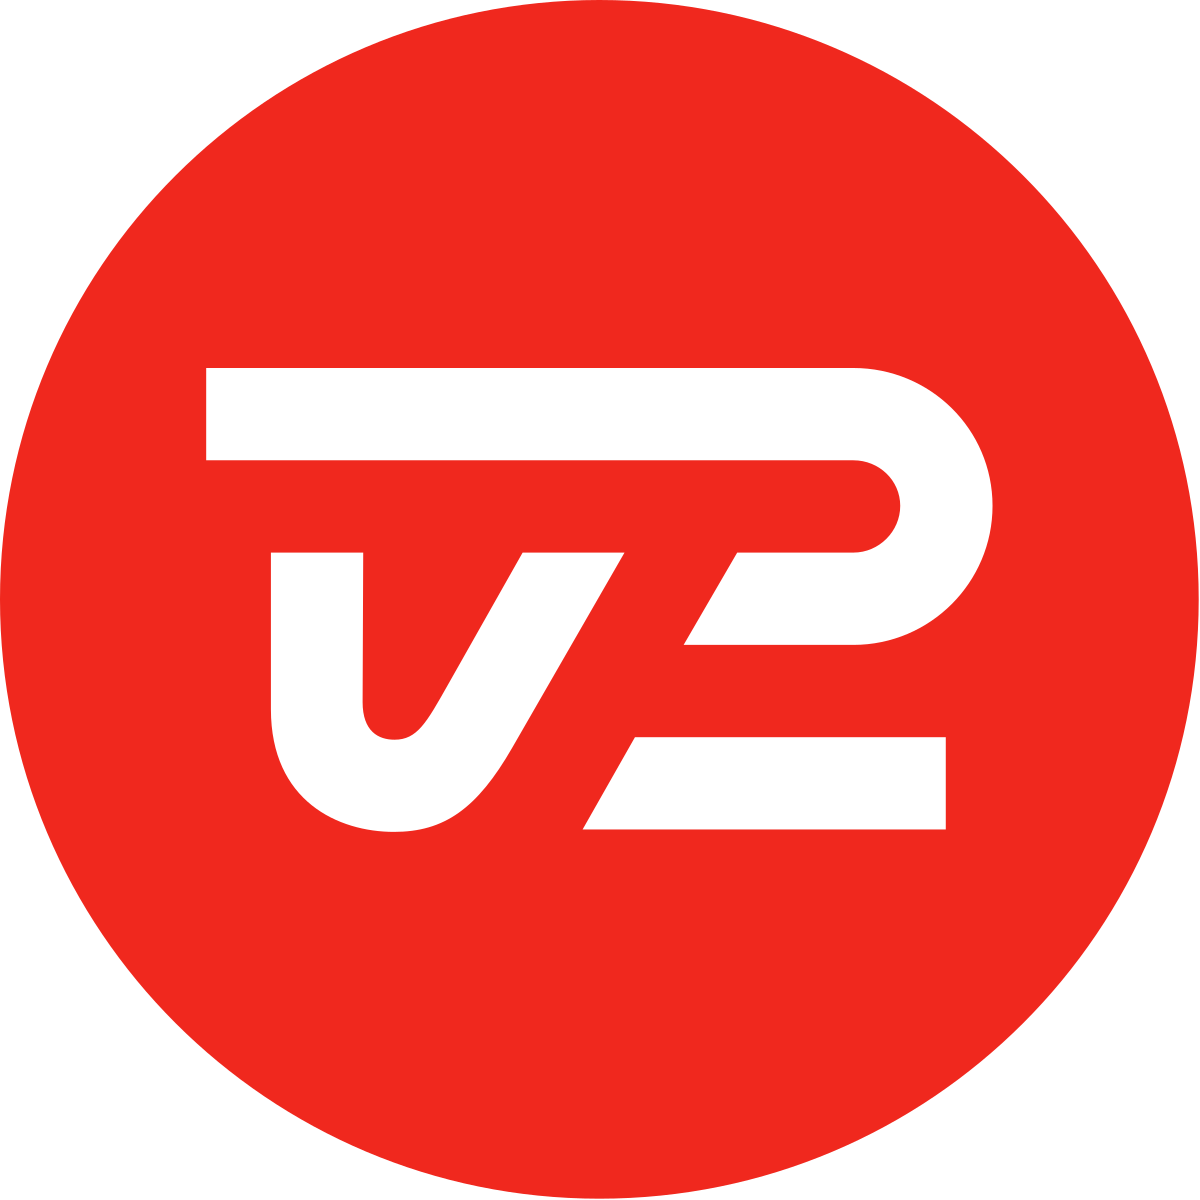 TV2 Logo